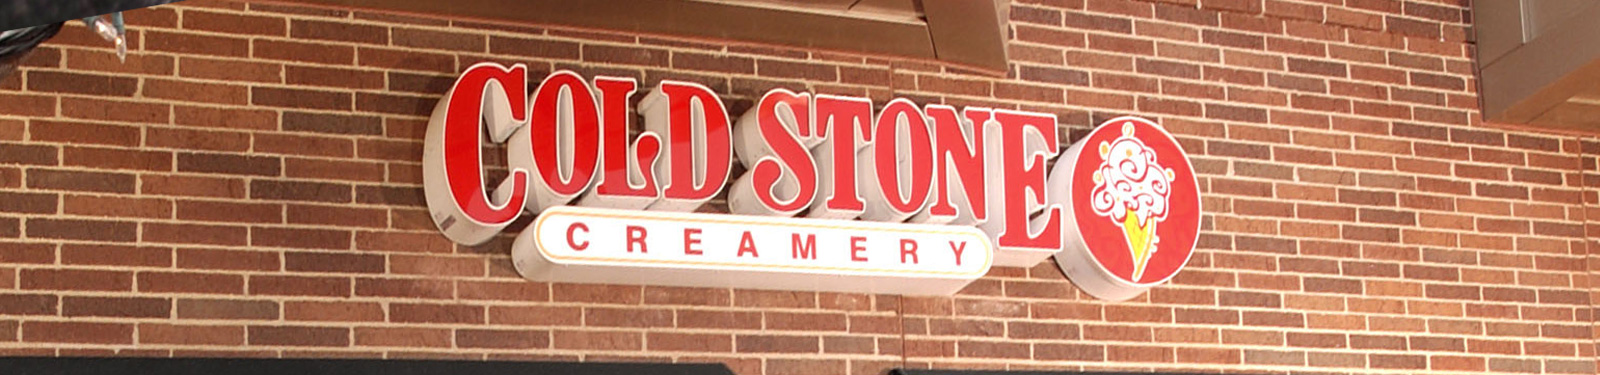 Cold Stone Creamery Sign